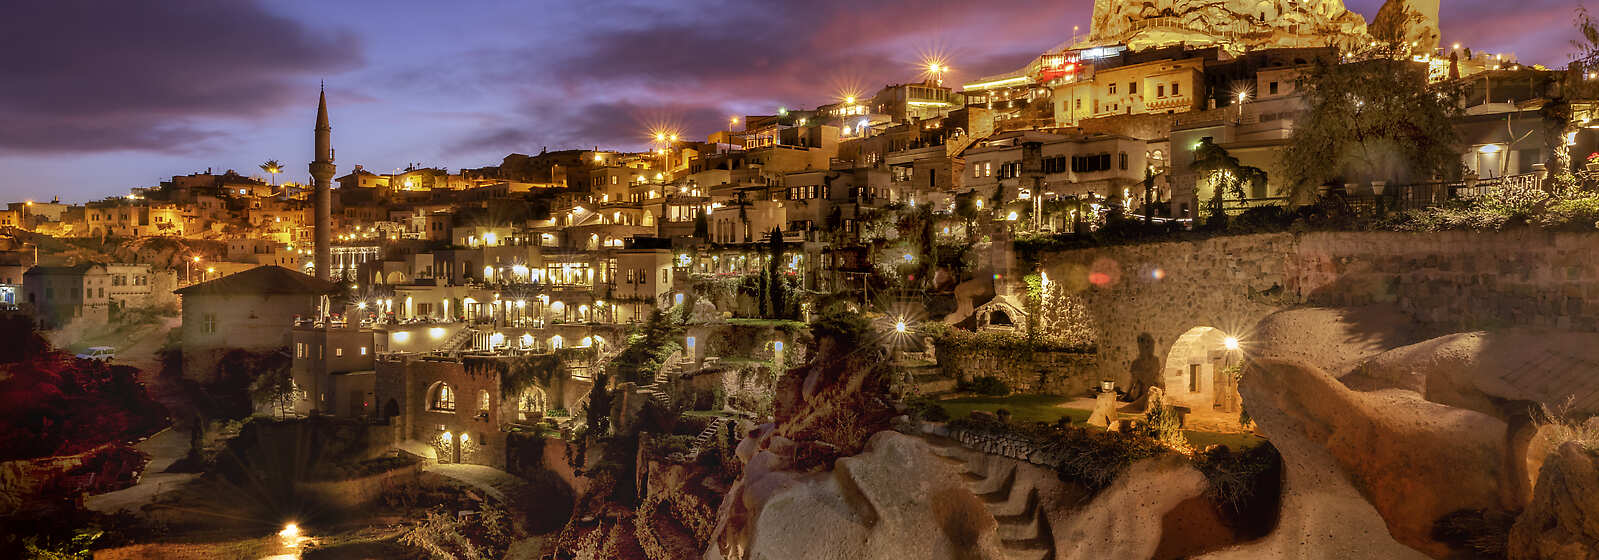 HOTEL WITH A VILLAGE FOR A HEART; Argos in Cappadocia… 